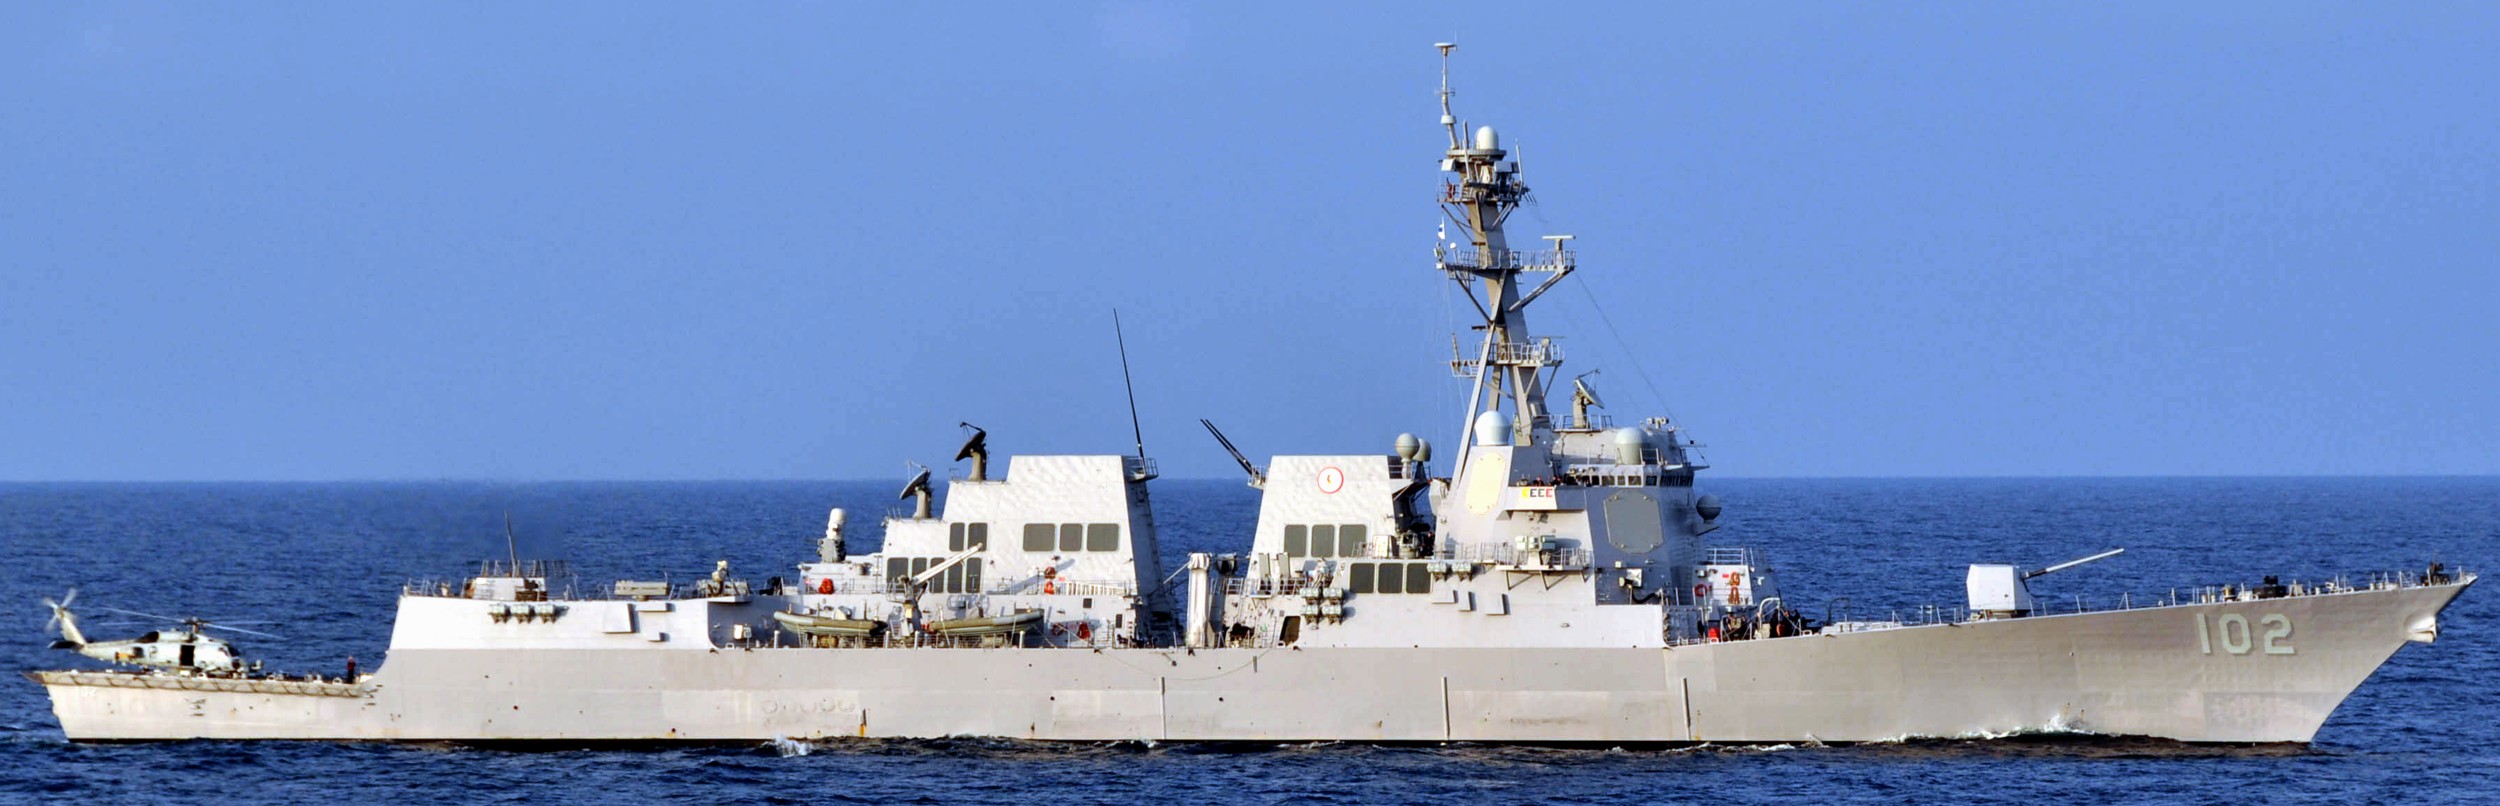 ddg-102 uss sampson guided missile destroyer 2009 41 north arabian sea